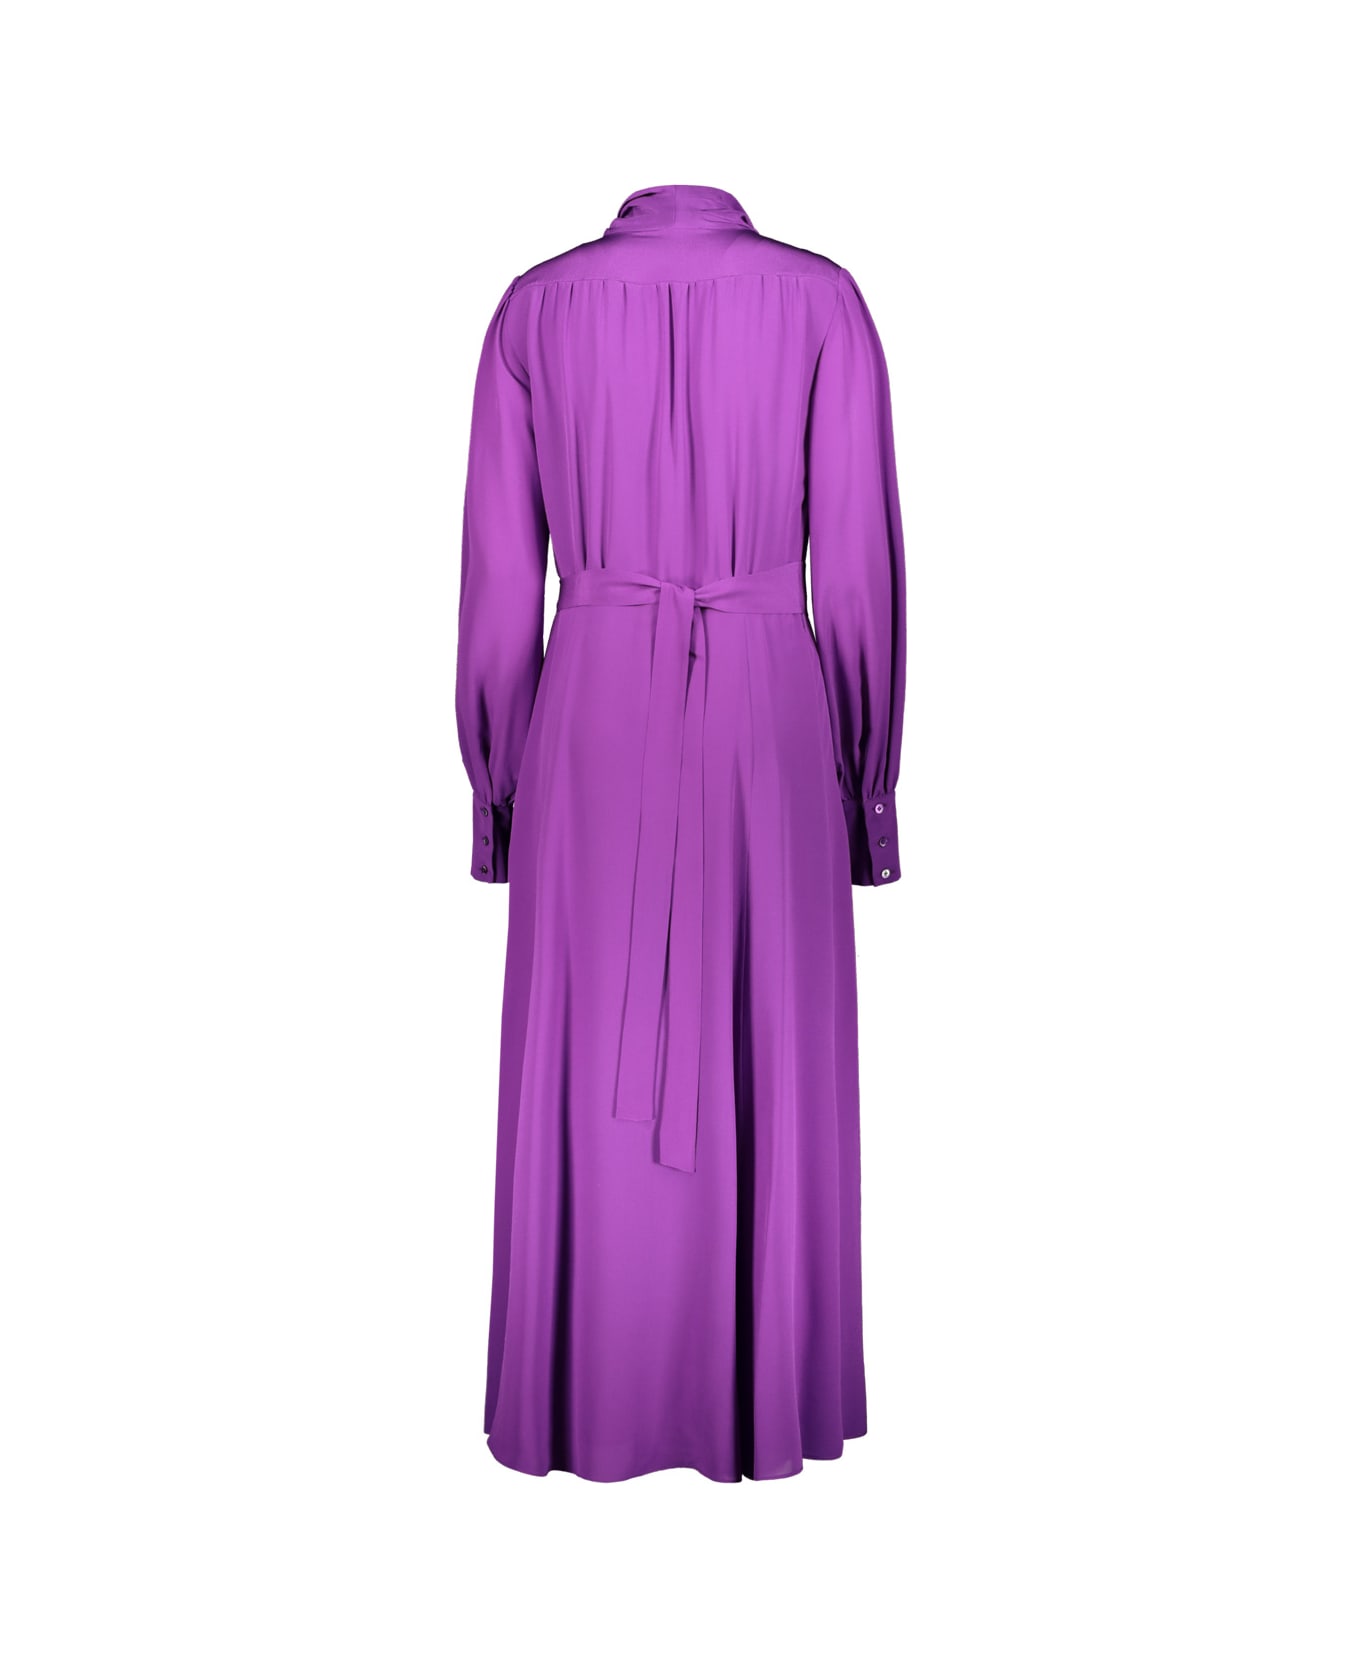 Rochas Long Dress In Crepe De Chine - Briight Purple